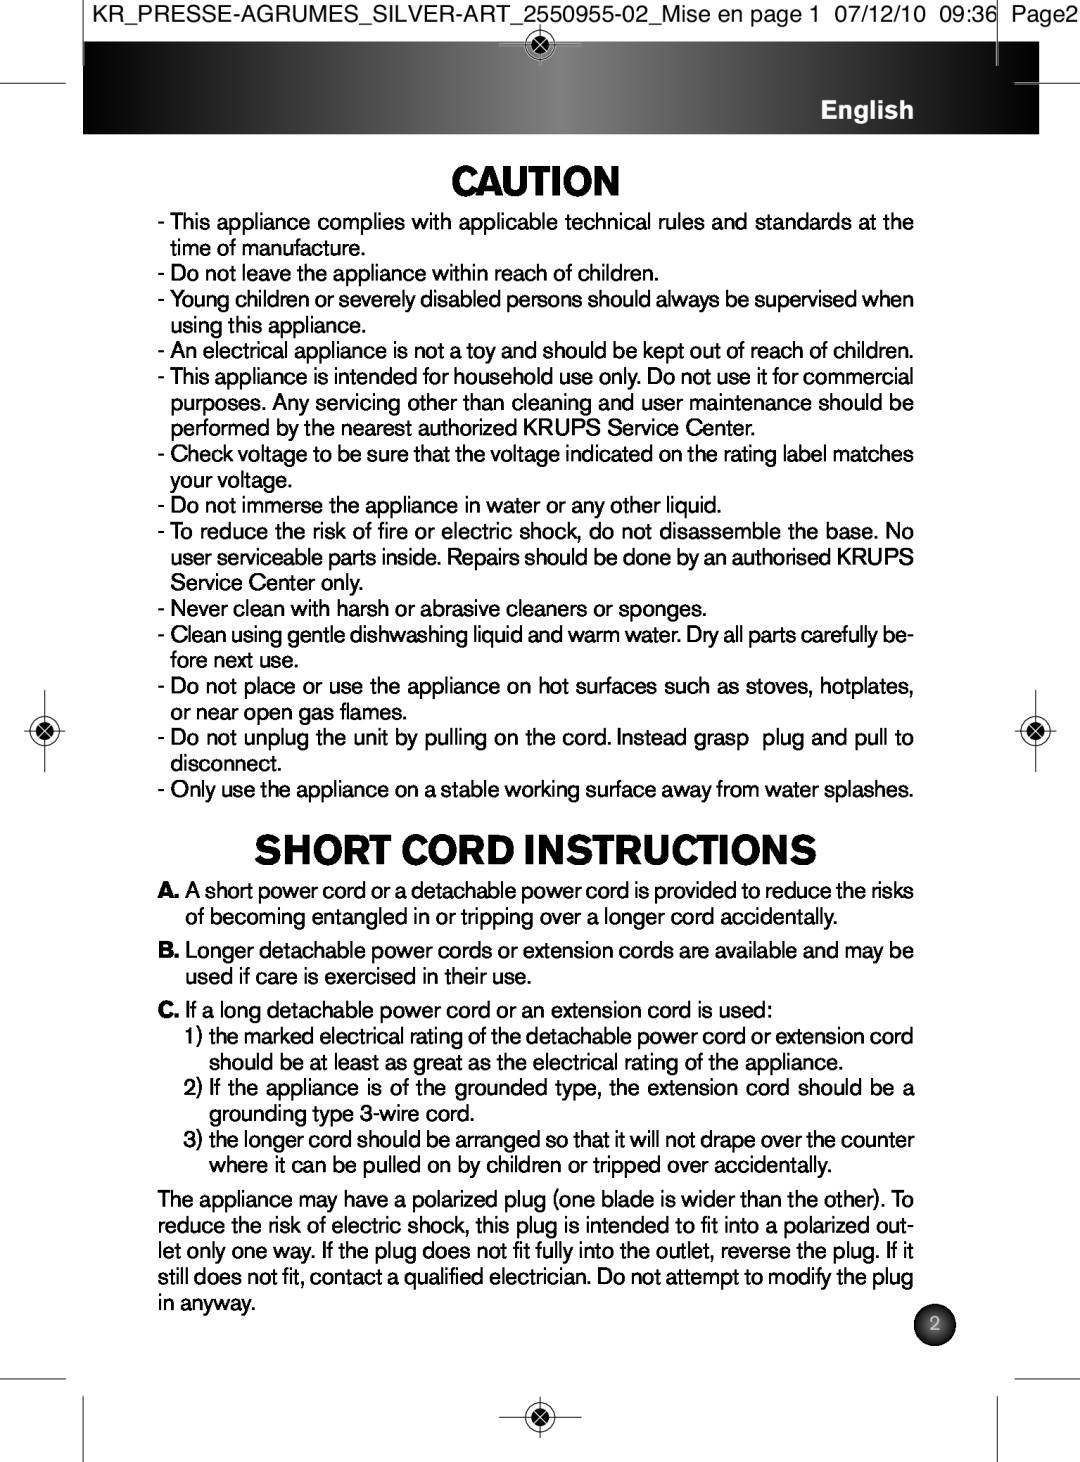 Krups 2550955-02 manual Short Cord Instructions, English 